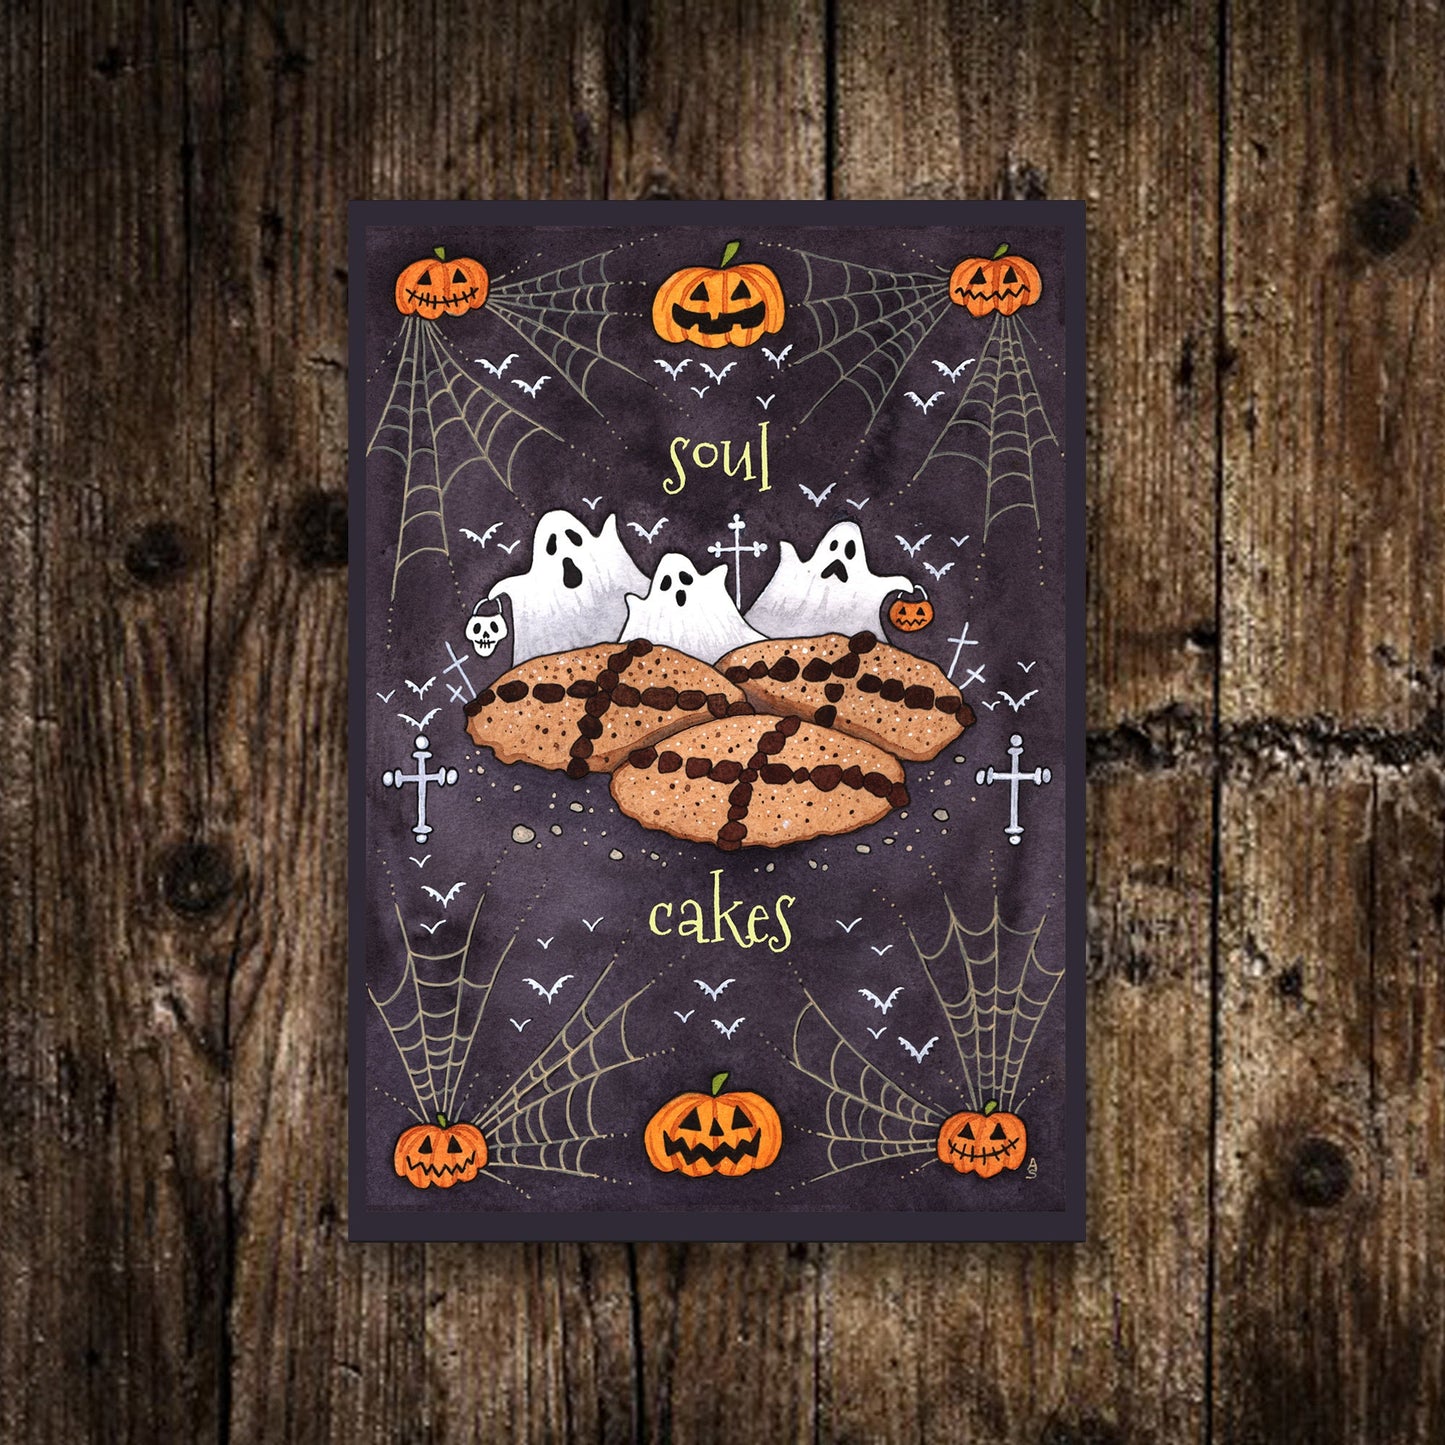 Mini Soul Cakes Print - Small A6 Spooky Halloween All Hallows Eve Samhain Baking Illustration - Trick Or Treat Ghost Bat Cobweb Decoration